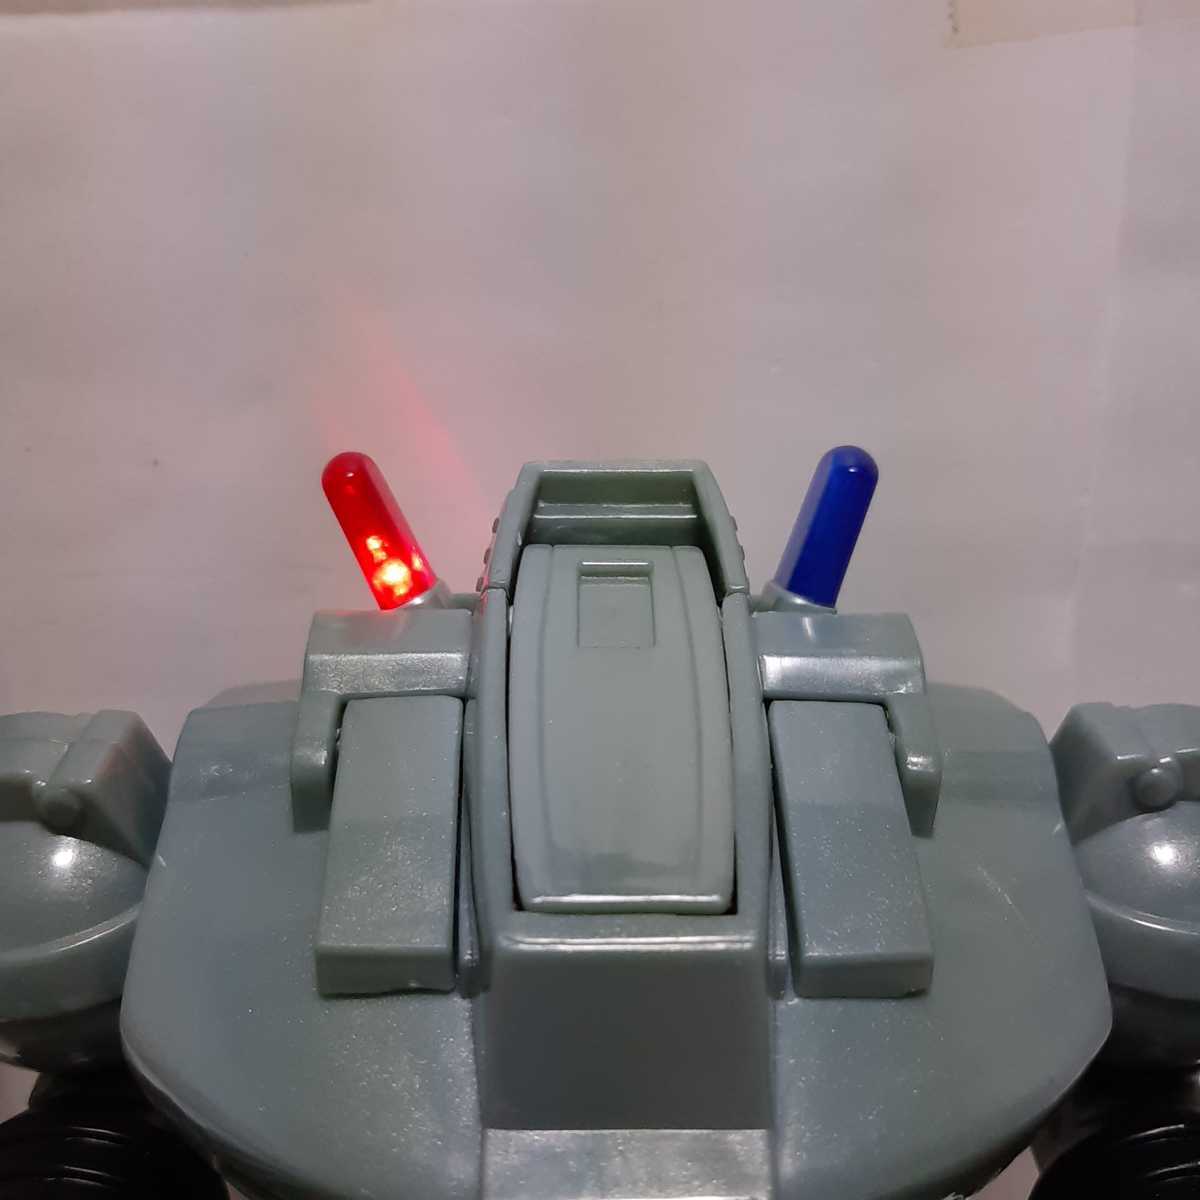  робокоп фигурка робот TOY ISLAND ELECTRONIC SOUNDS and LIGHT ED-509 REXORRobocop игрушка игрушка American Comics Северная Америка 